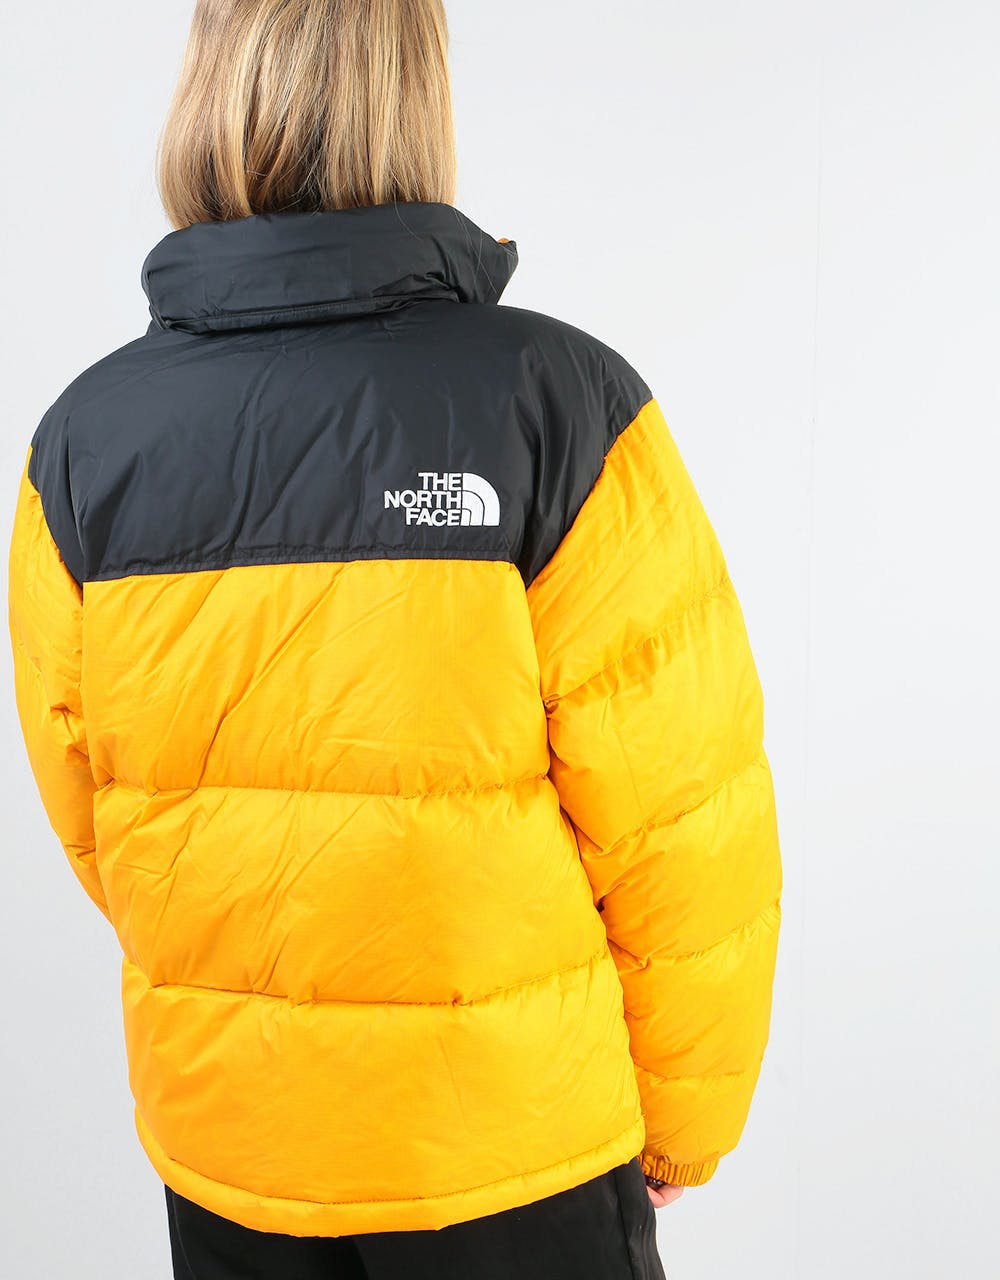 The North Face 1996 Retro Nuptse Jacket - Orange